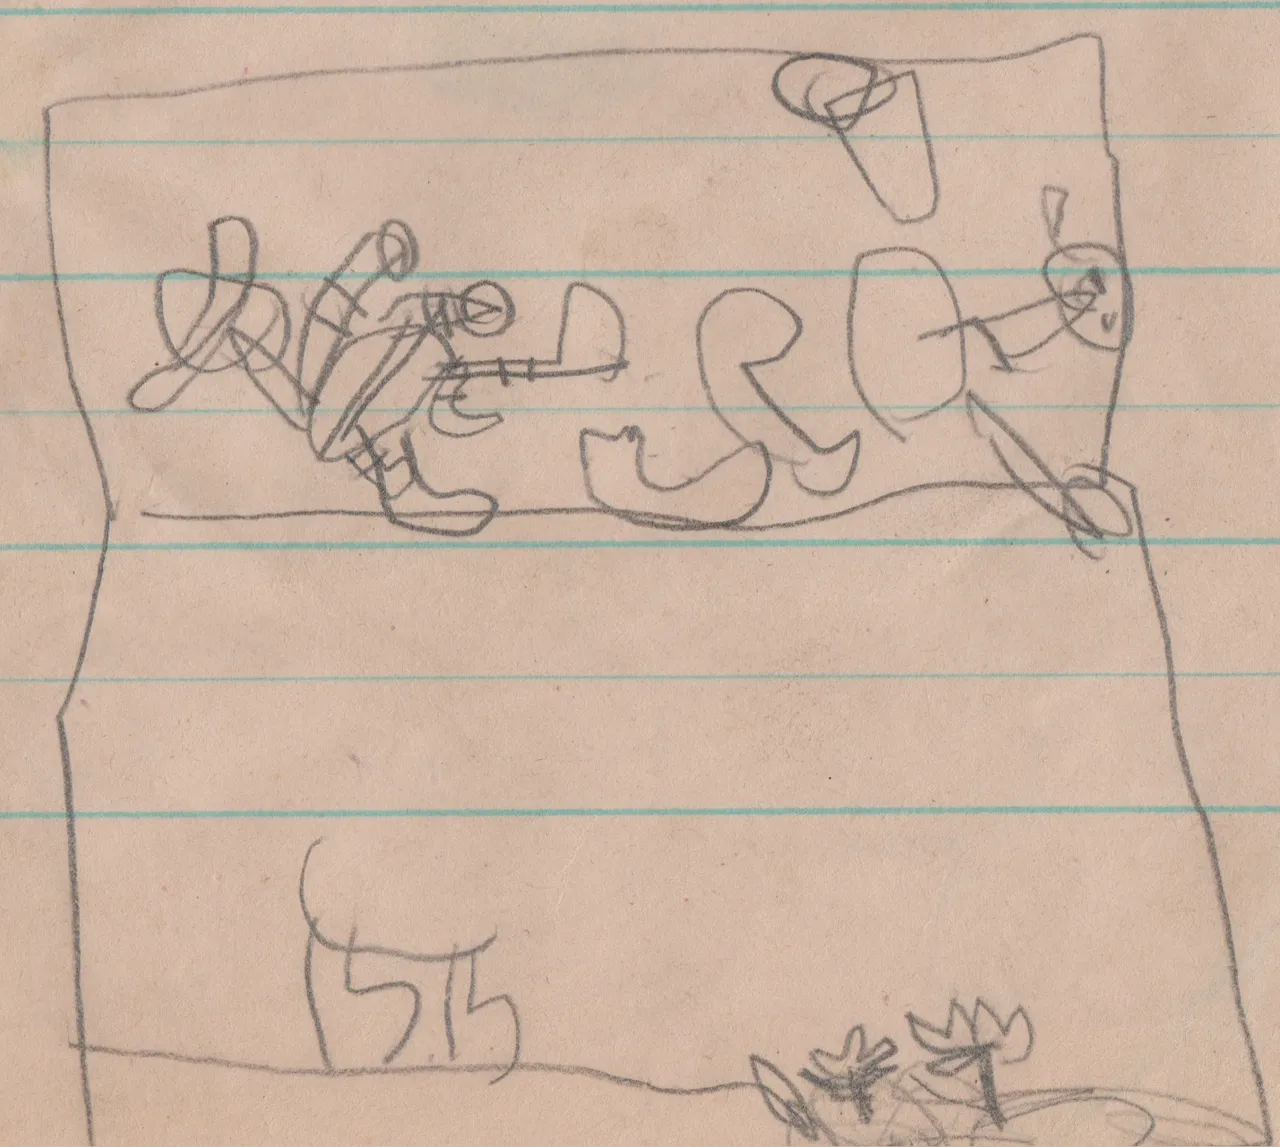 1993 maybe - Pencil Art - Turtle kicking a bad guy - Comic Strip.jpg